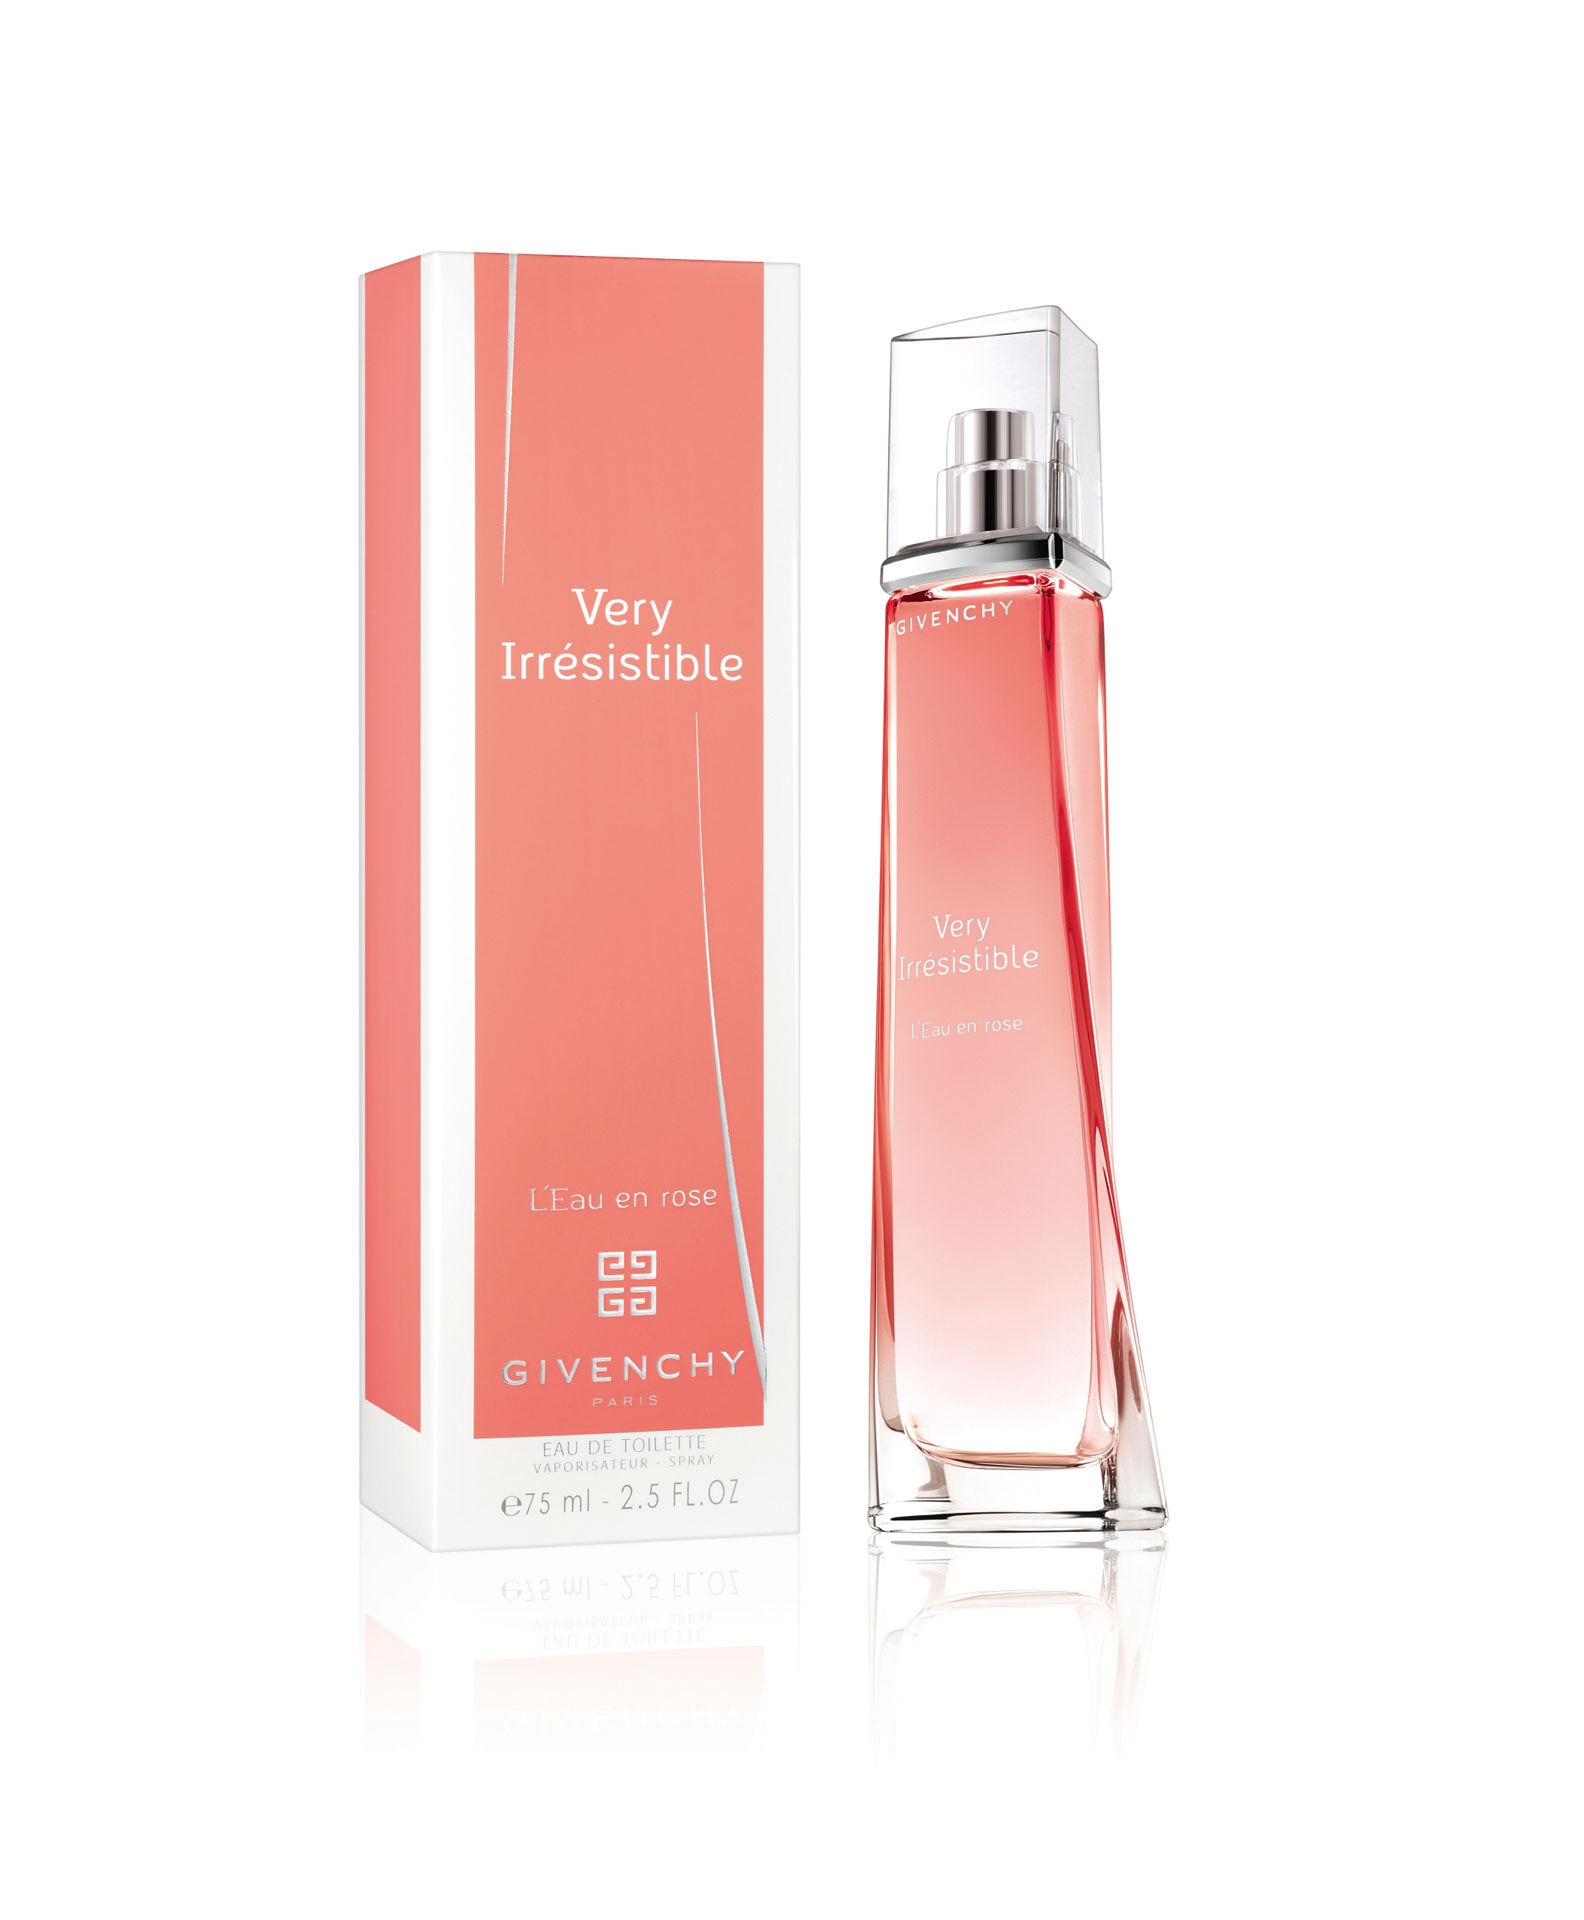 Very Irresistible L'eau En Rose » Givenchy » The Parfumerie » Sri Lanka